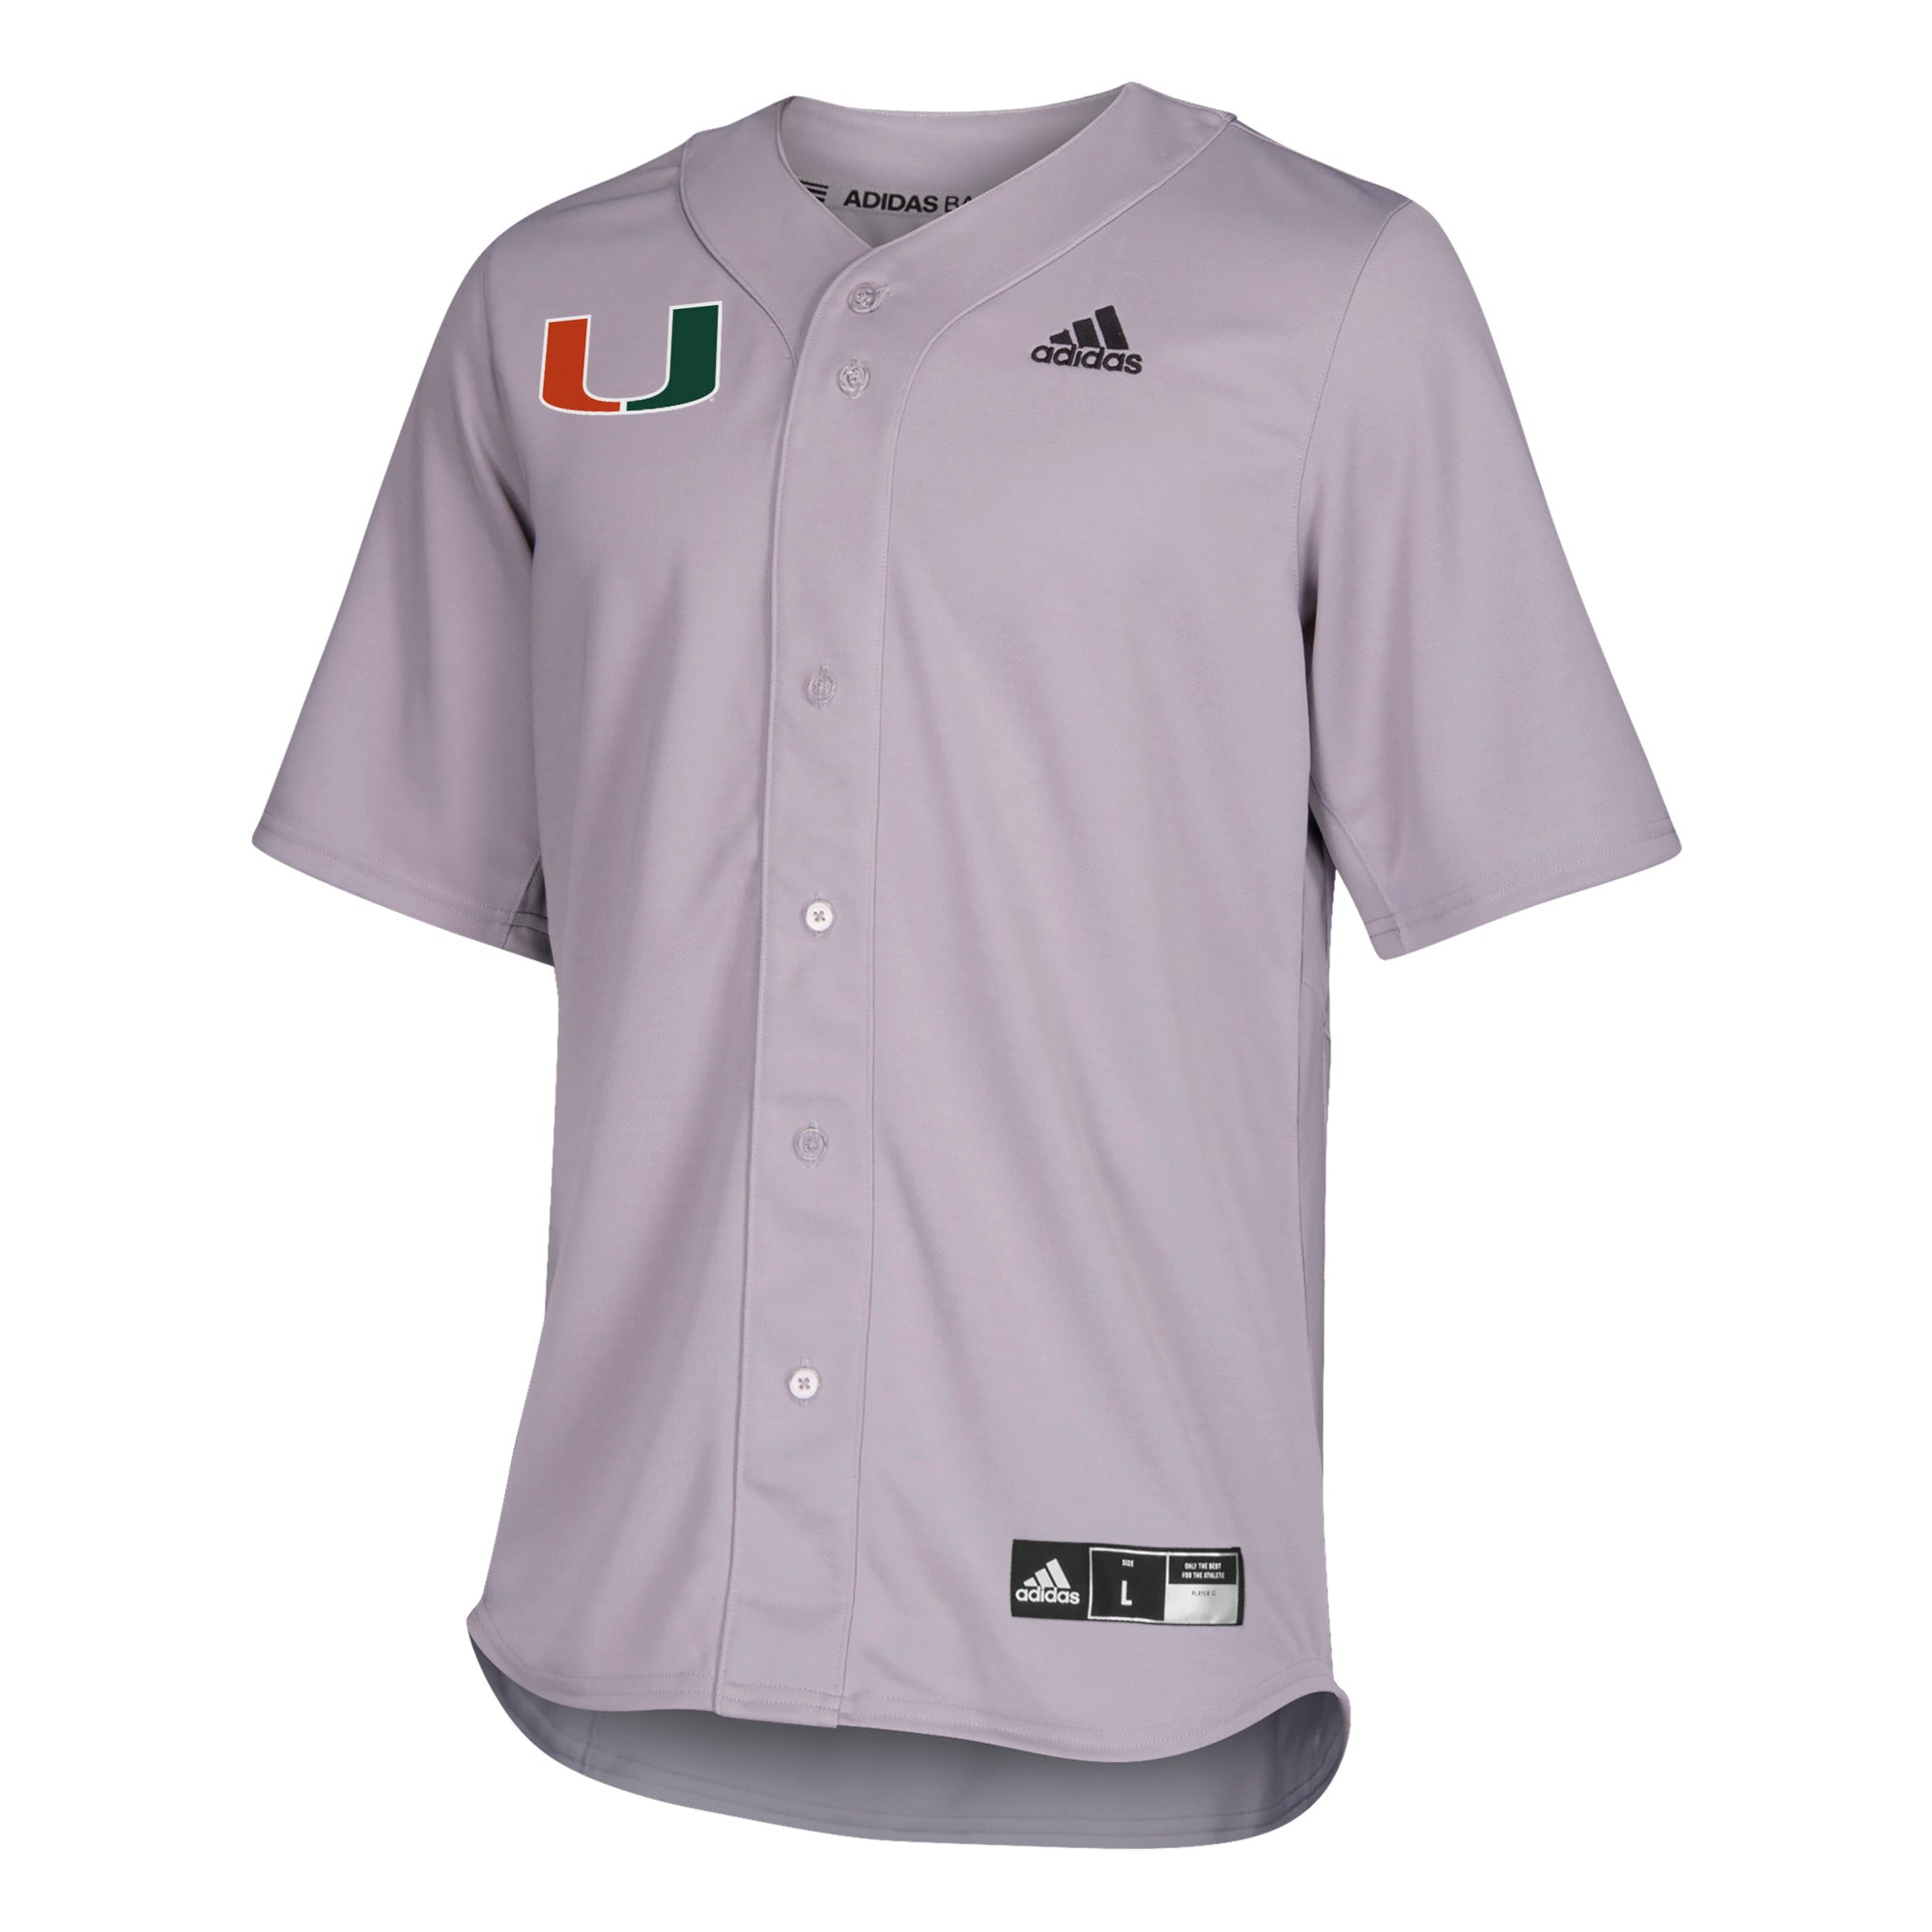 hurricanes baseball jersey